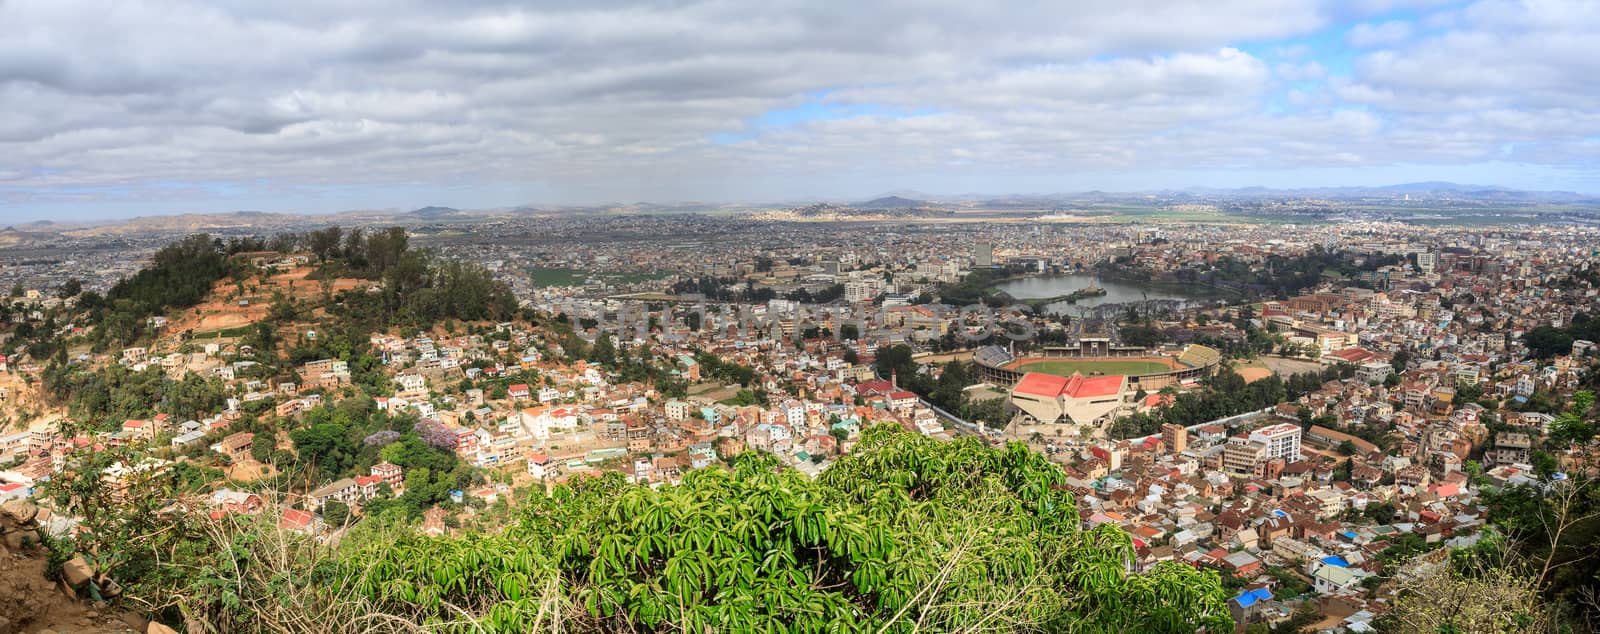 panorama of Antananarivo capital of Madagascar by artush